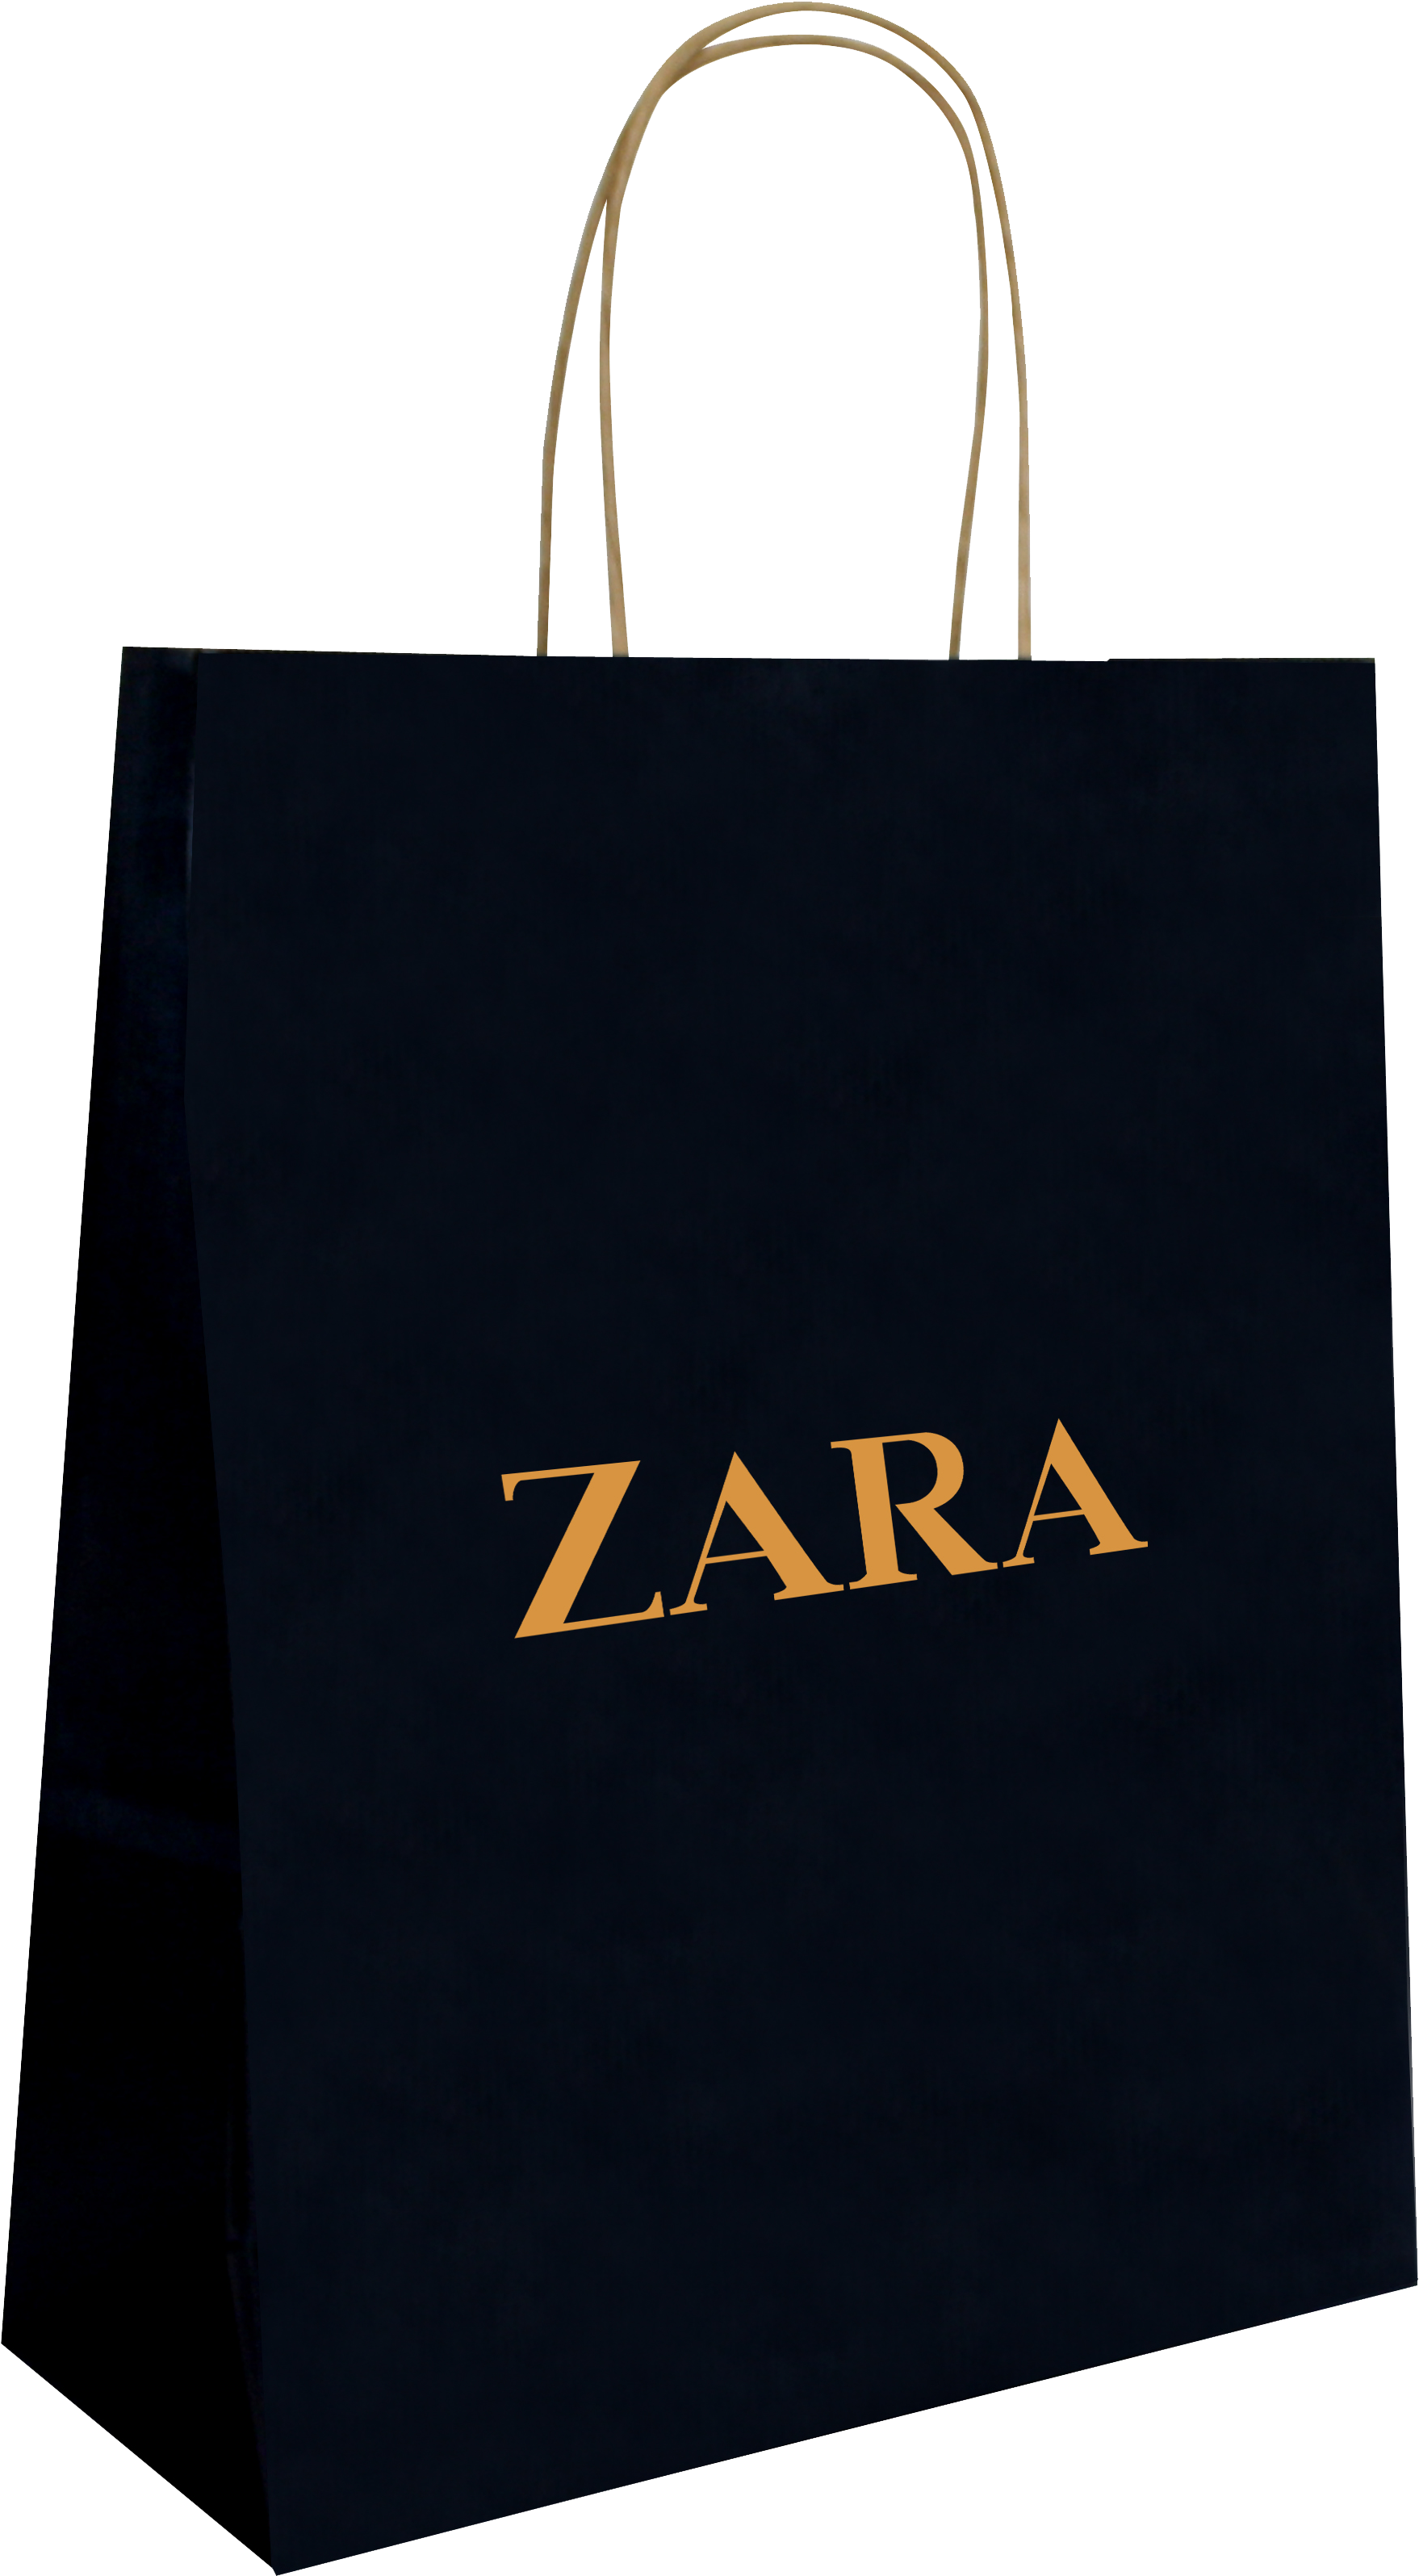 Zara Download HD PNG Image